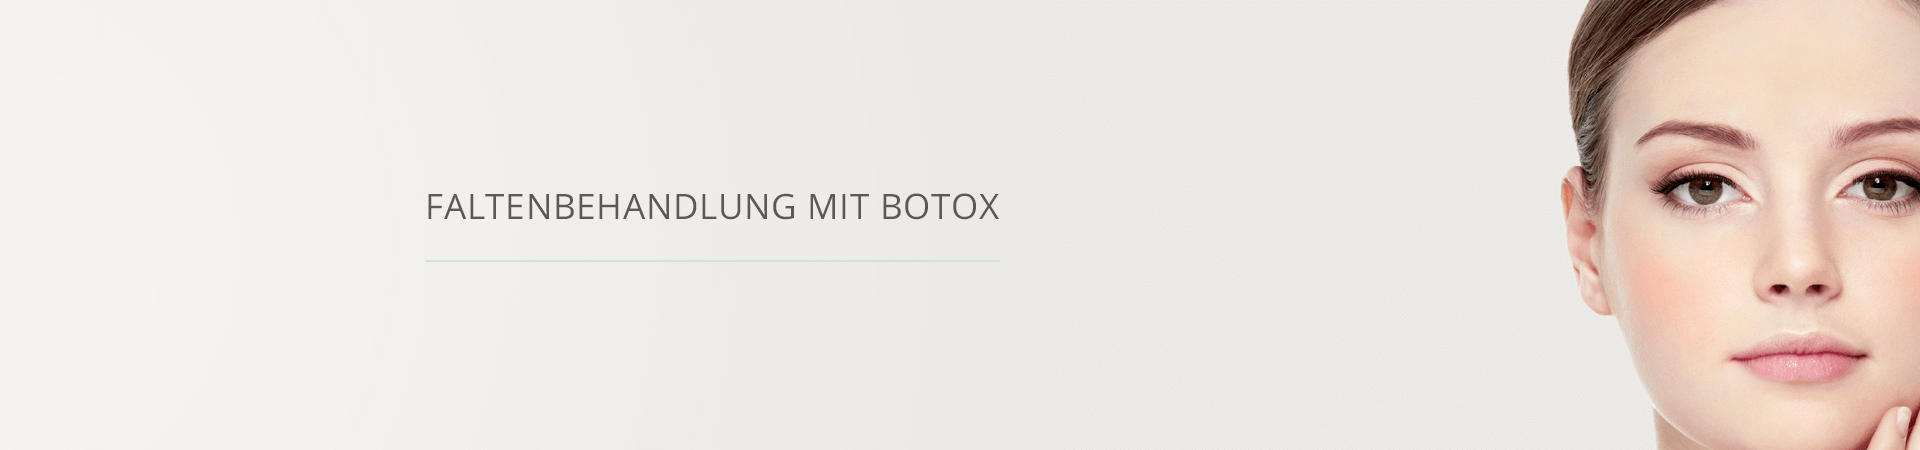 Faltenbehandlung Botox, Plastische Chirurgie Berlin, AesthetiCum, Dr. Ahrens, Dr. Fritzsch 